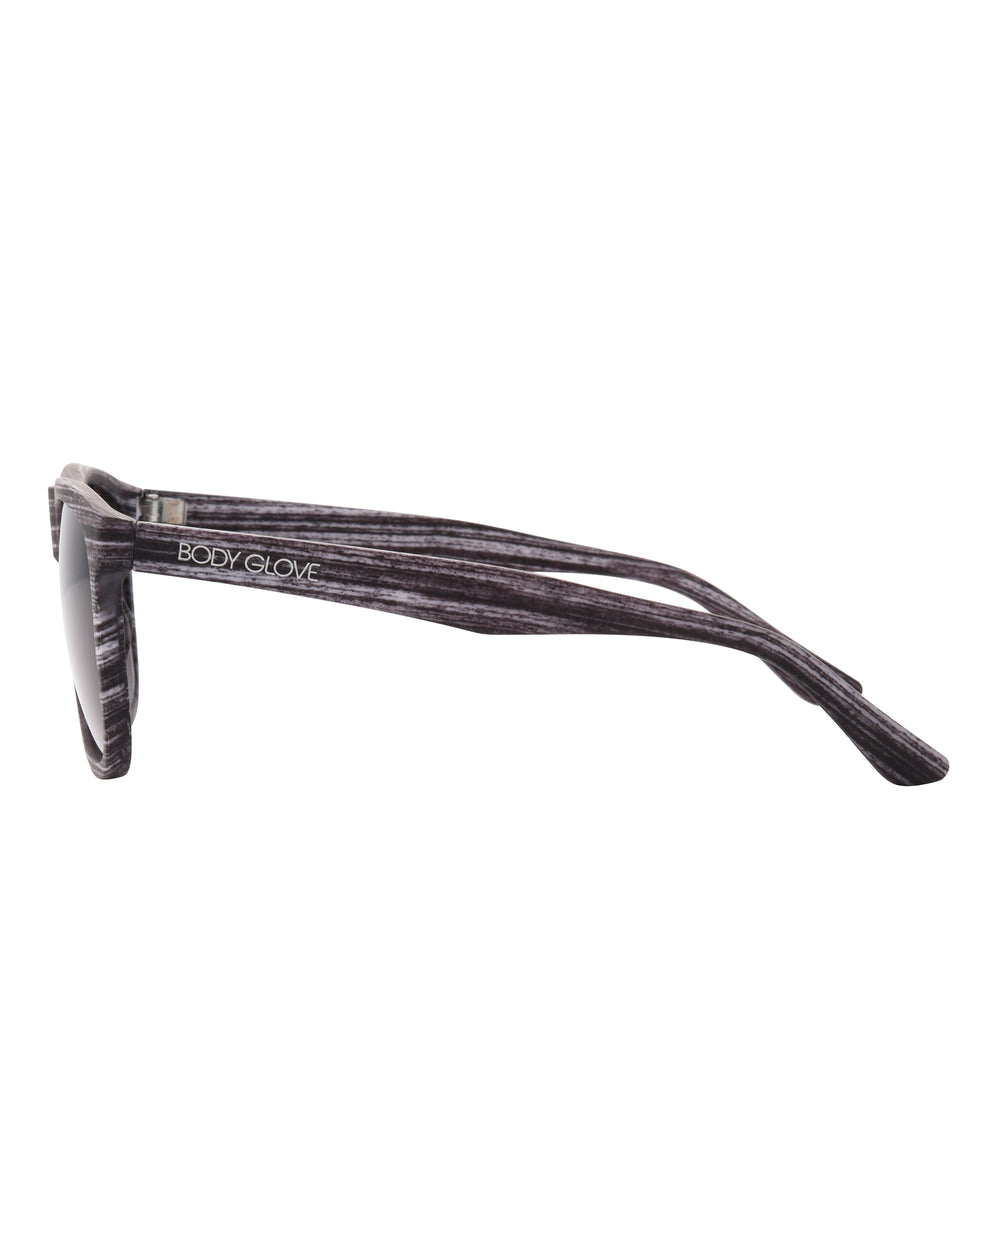 Talise Way-Style Frame Sunglasses - Black/Wood - Body Glove